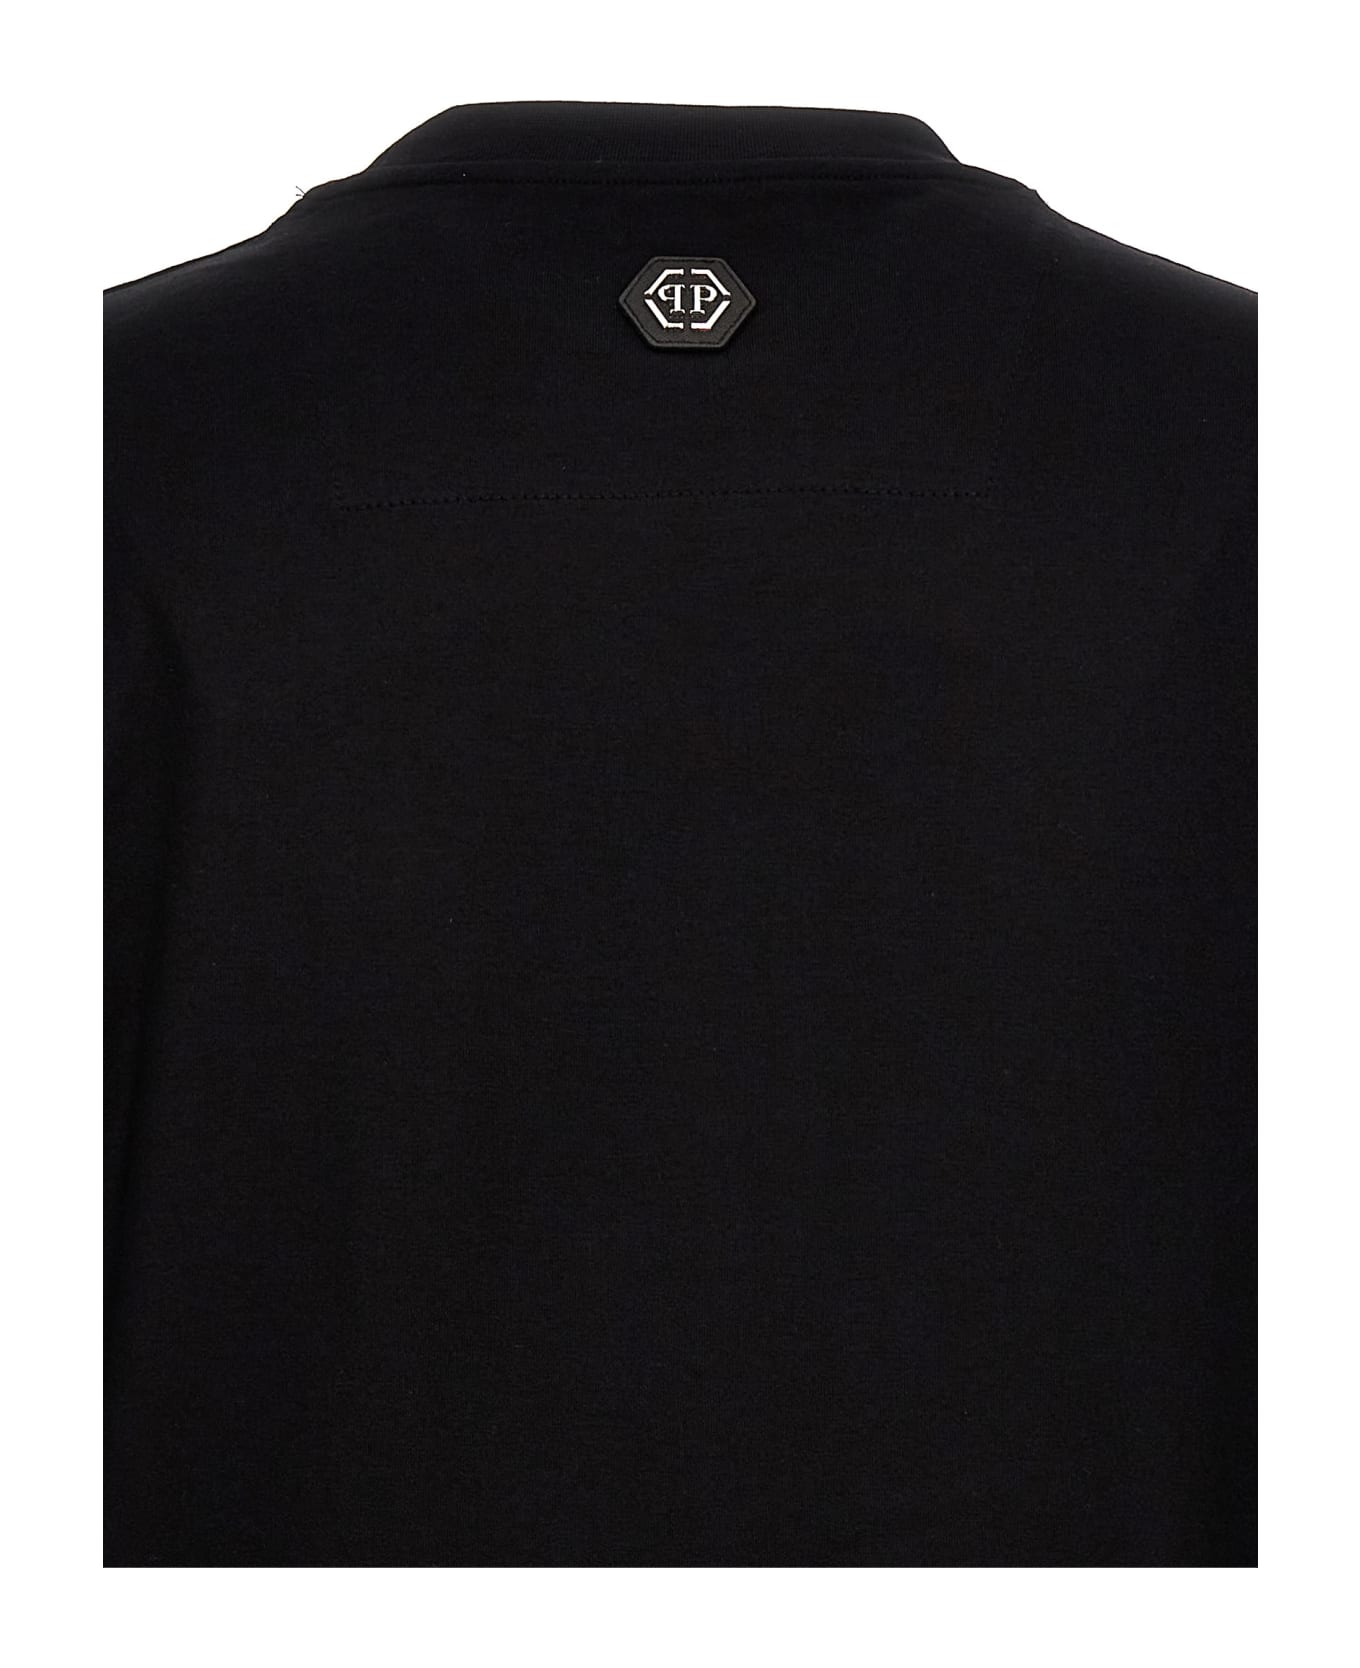 Philipp Plein Rhinestone Logo T-shirt - BLACK